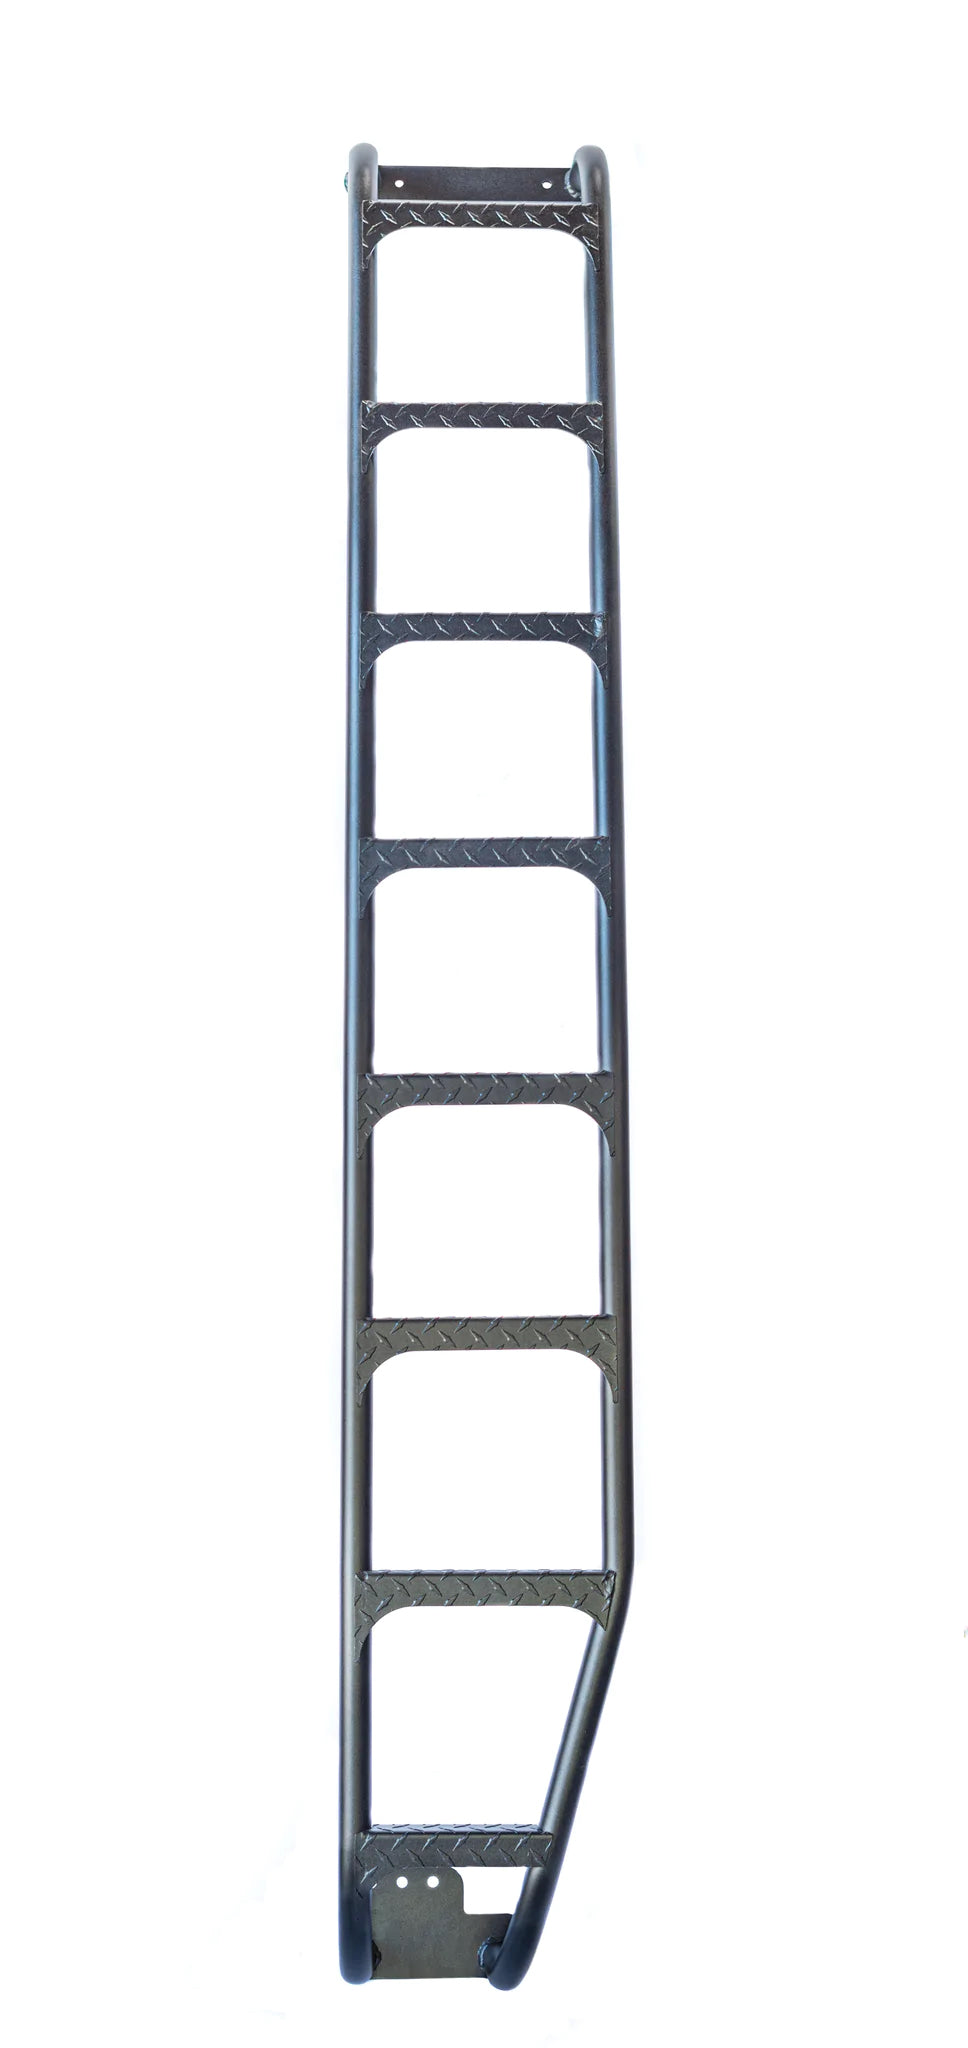 who makes husky ladders